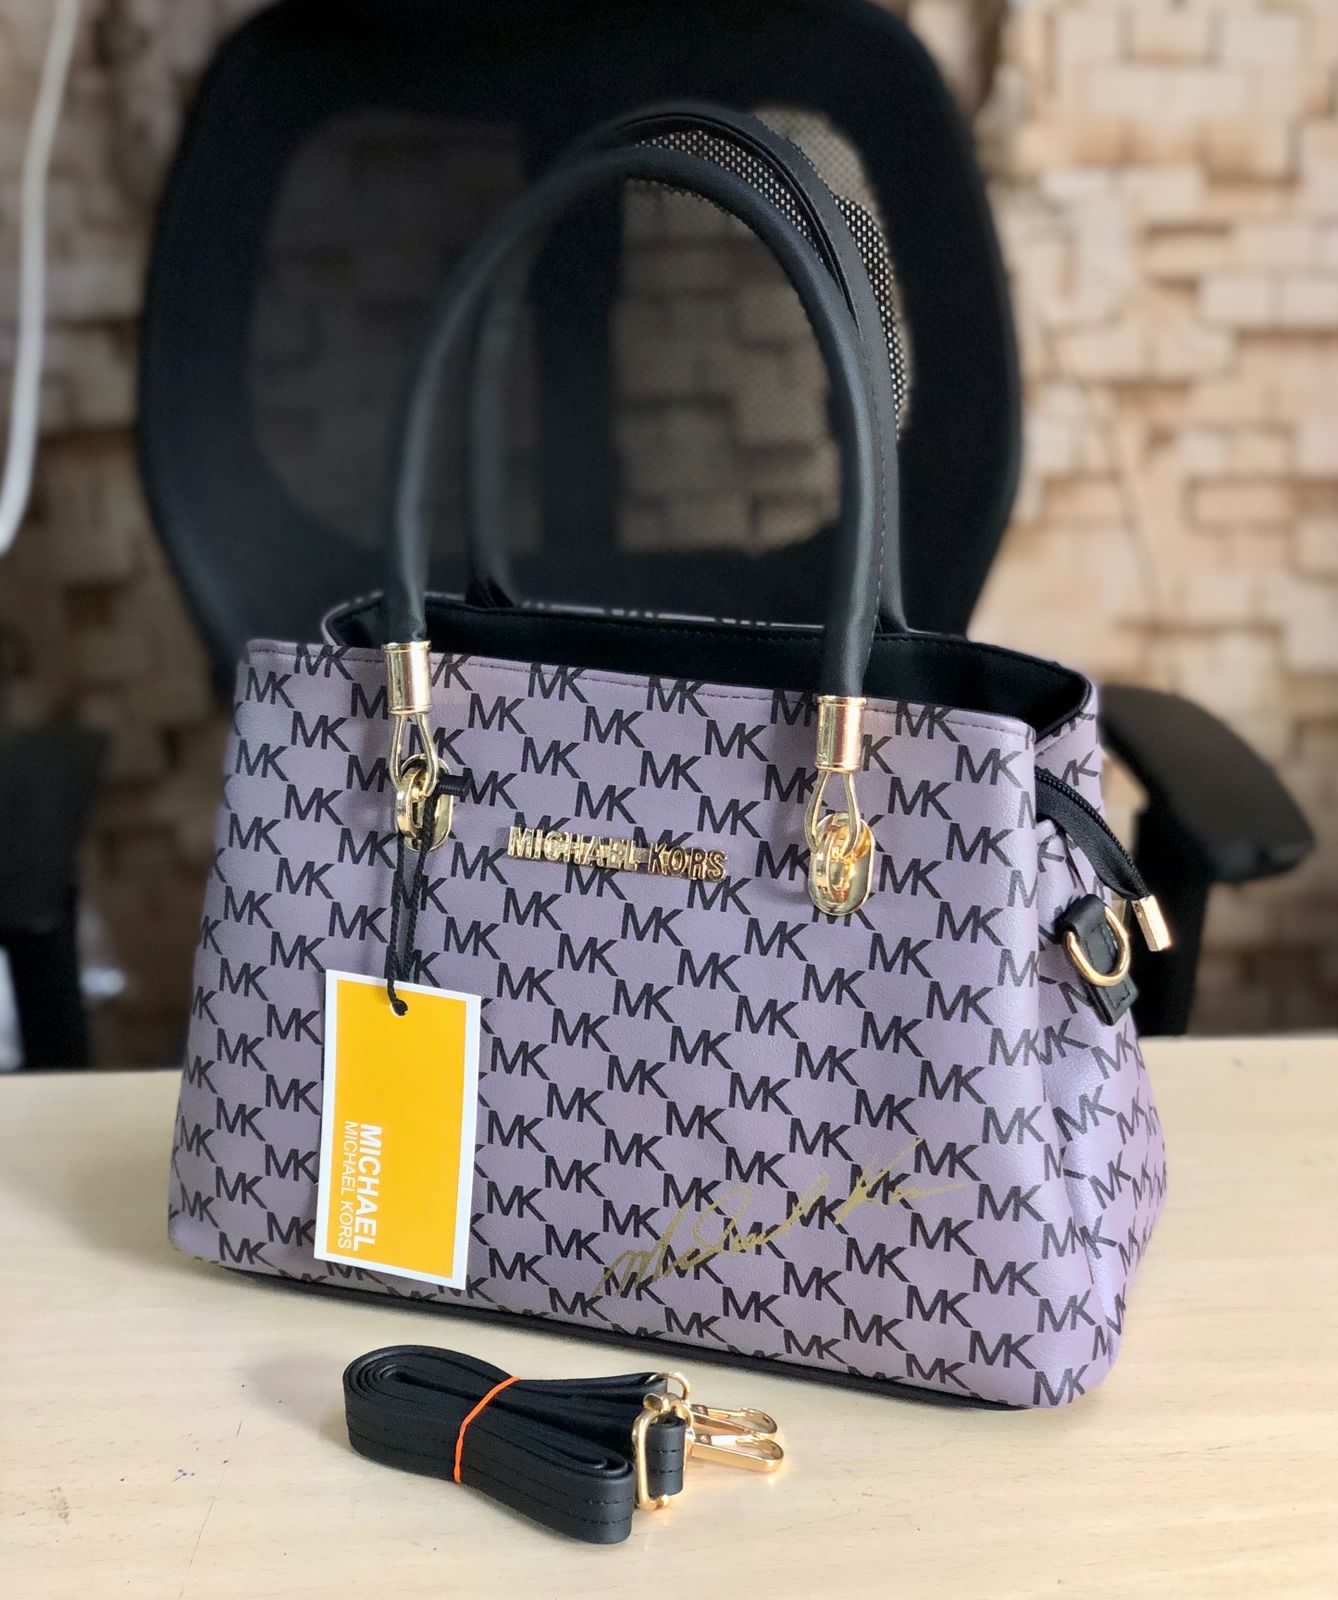 Shop Michael Kors Bags for Women in UAE - MK Bags | Ounass